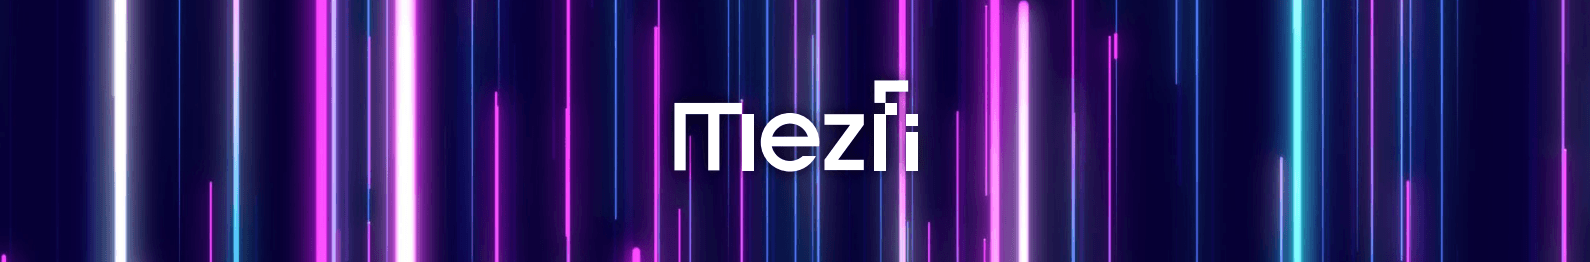 Mezfi_Pty_Ltd1